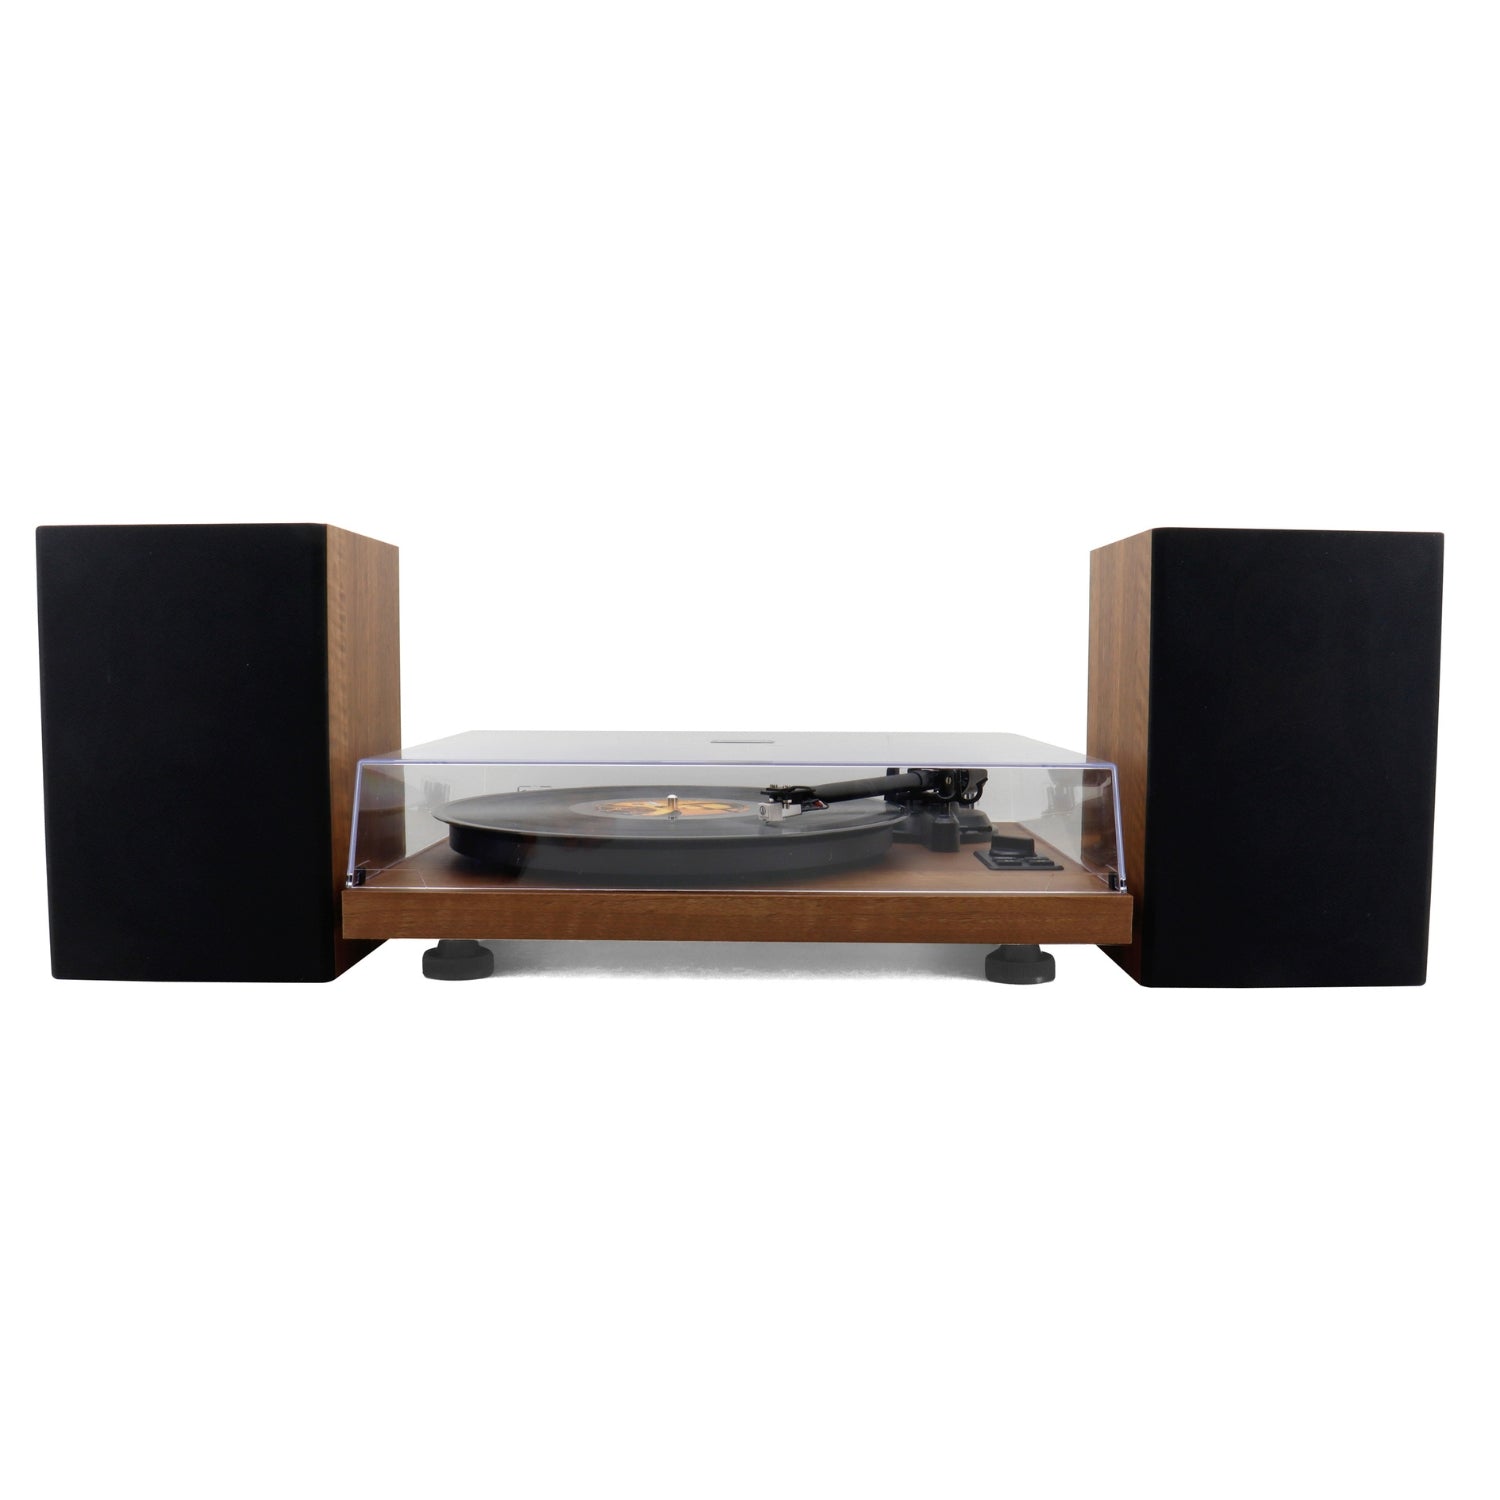 Soundmaster EliteLine PL711 Wooden Turntable Audio Technica Bluetooth PC-encoding 2-way bass reflex speaker